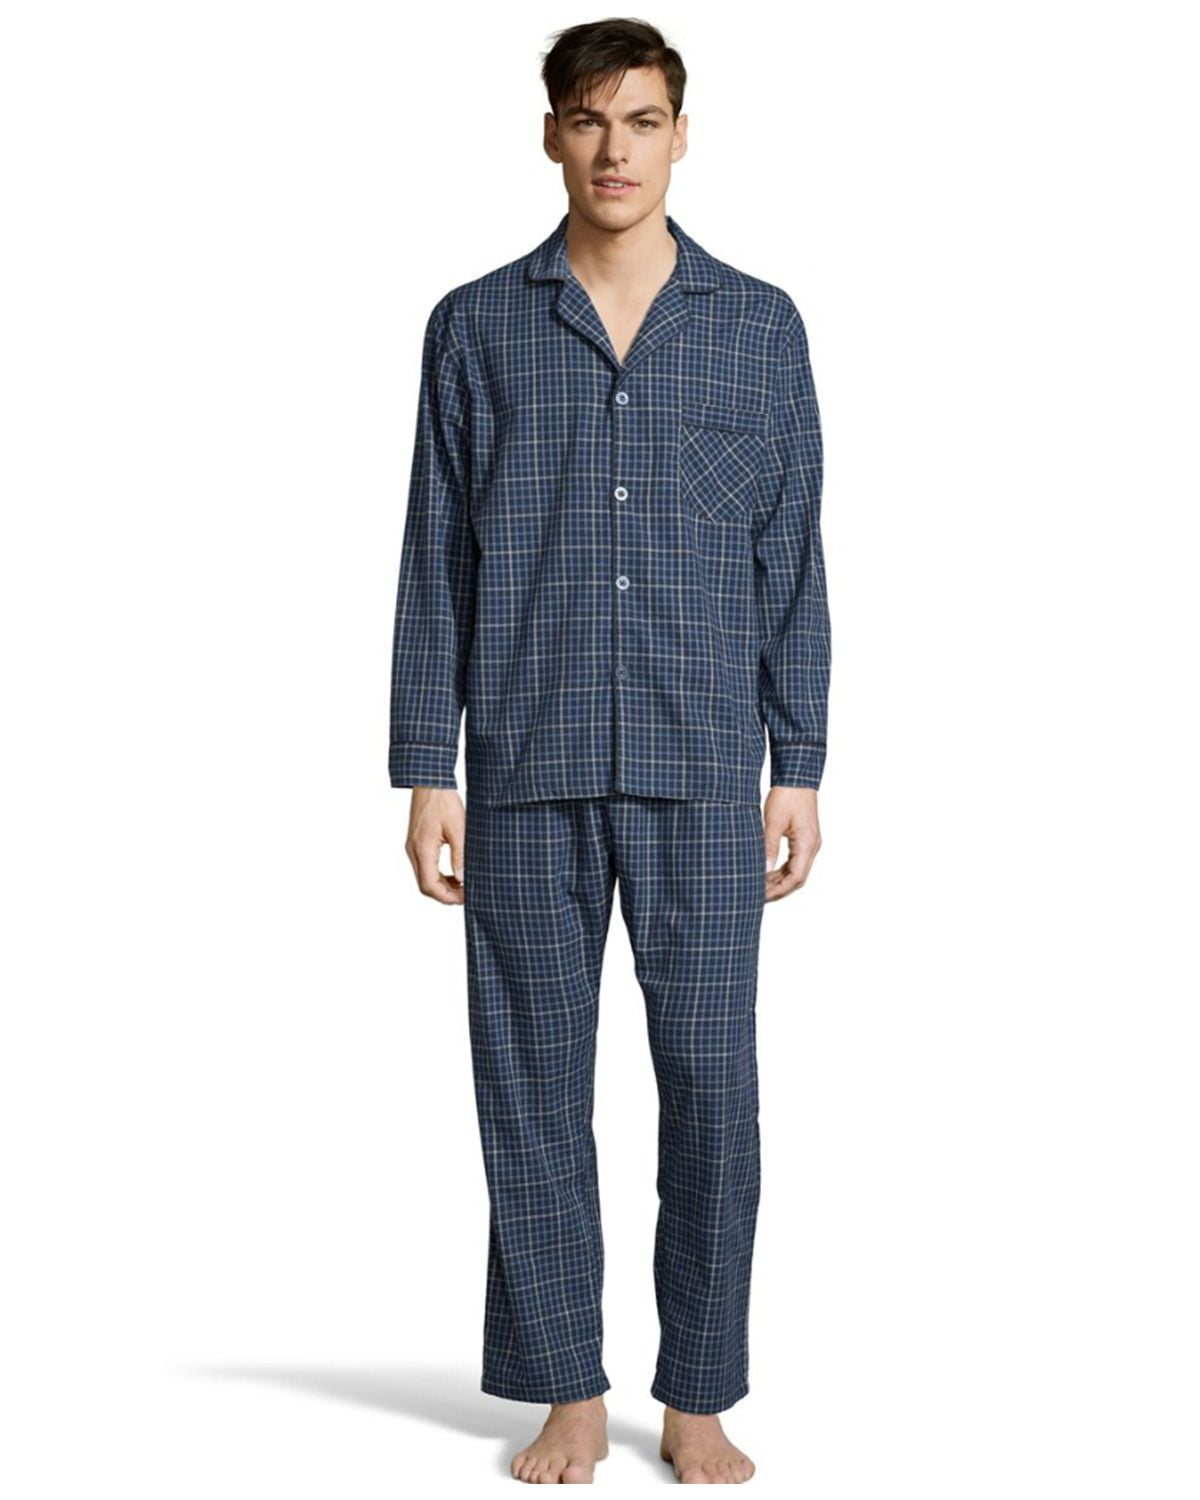 Hanes Sleepwear 91002 Mens Big Woven Plain Weave Pajama Set Choose SZ/Color. 